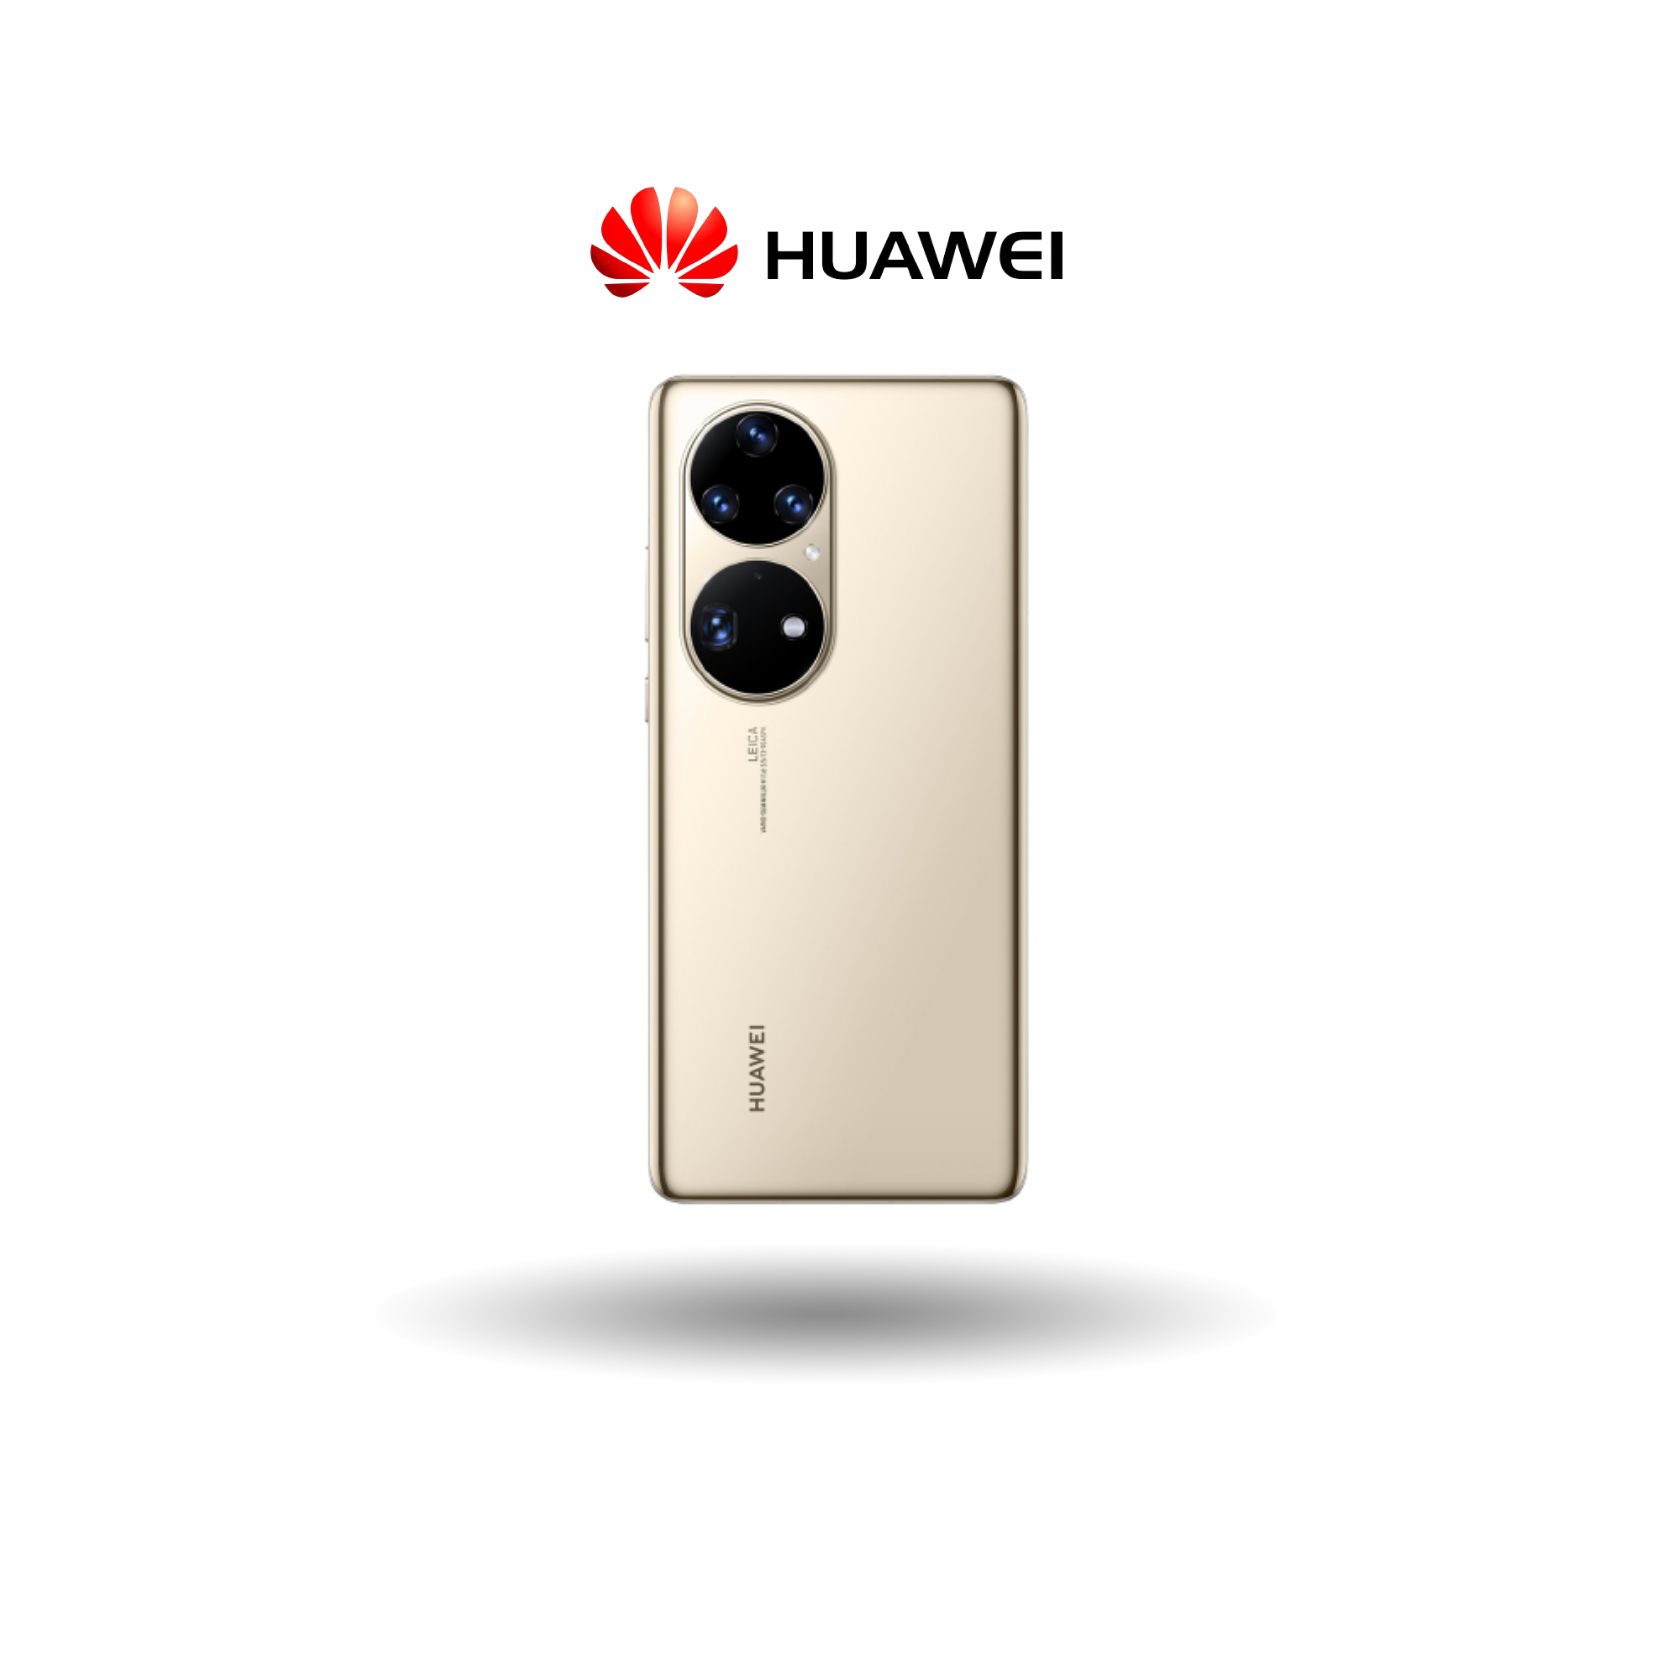 [Per-order] Huawei P50 Pro  120 Hz Screen Refresh Rate  Professional-Grade Colour Accuracy  8Gb RAm + 256Gb Rom